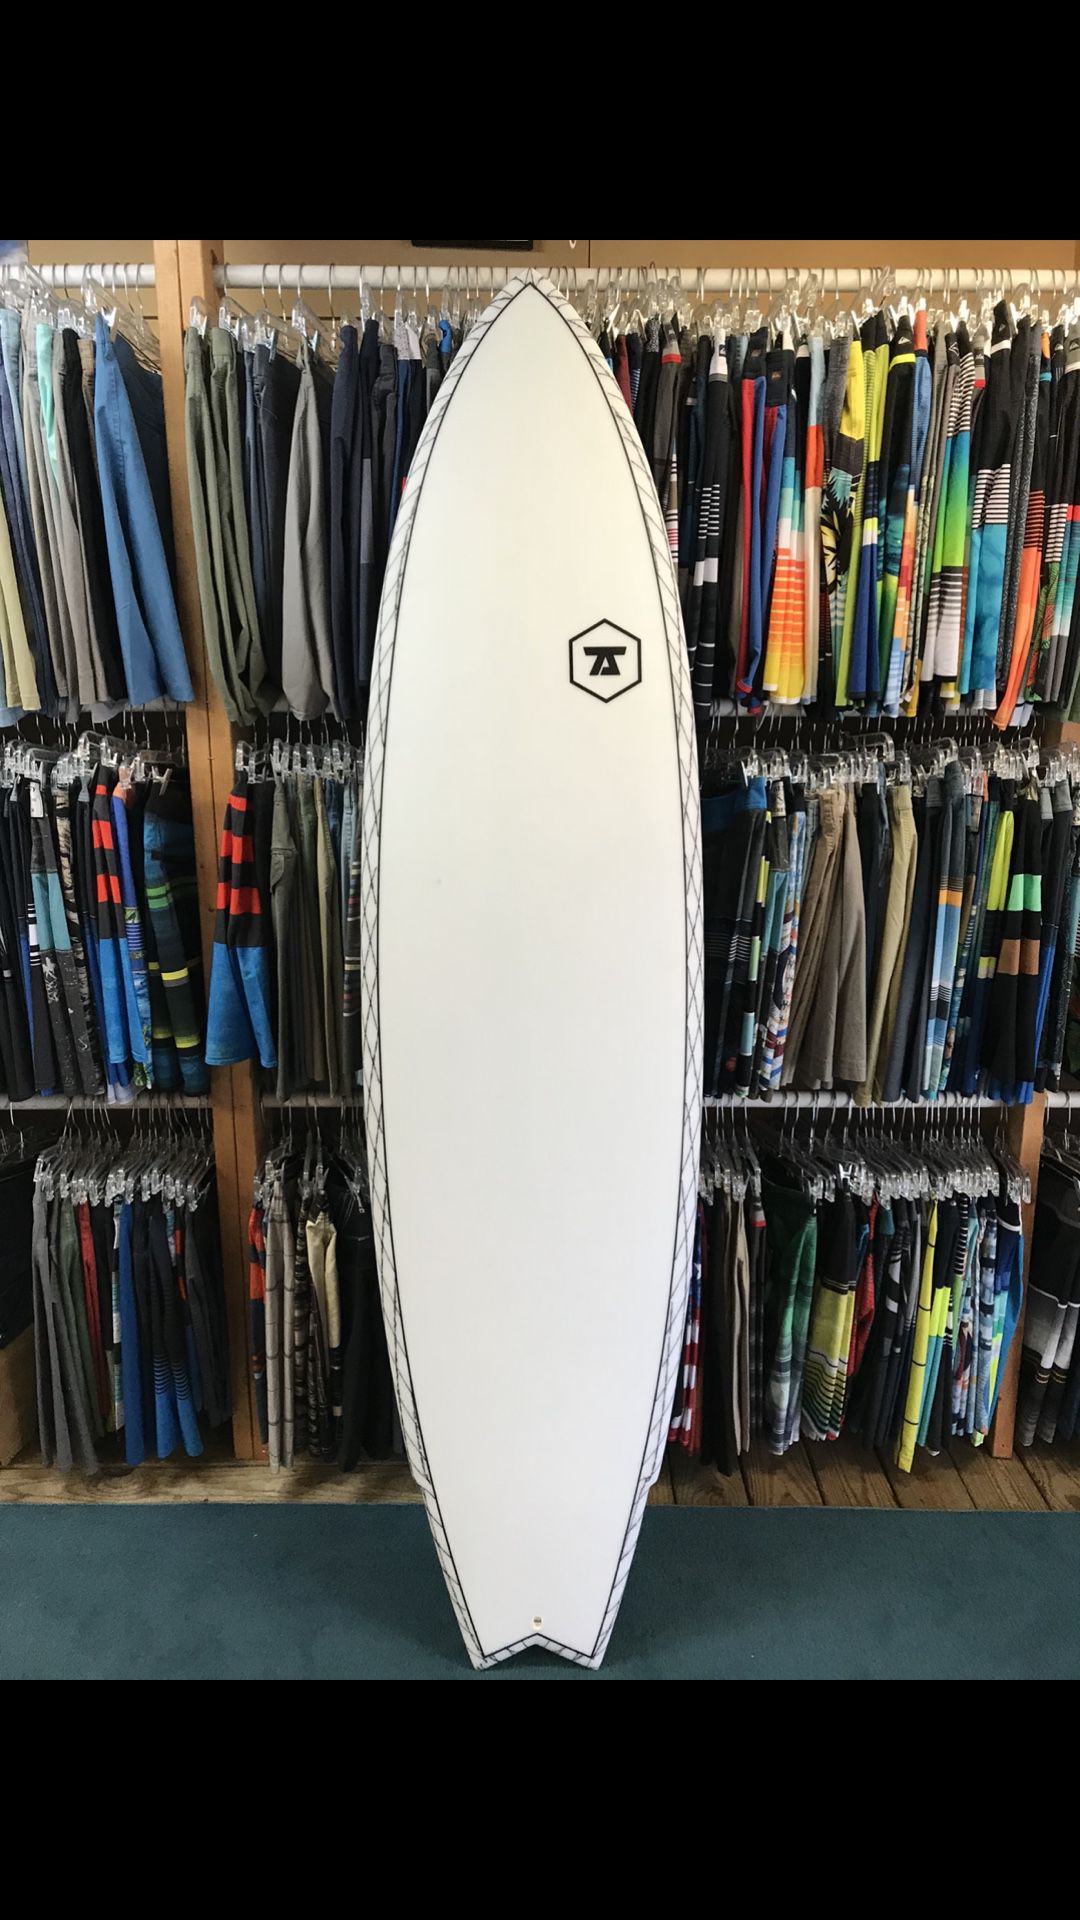 7 Surfboards “superfish” board